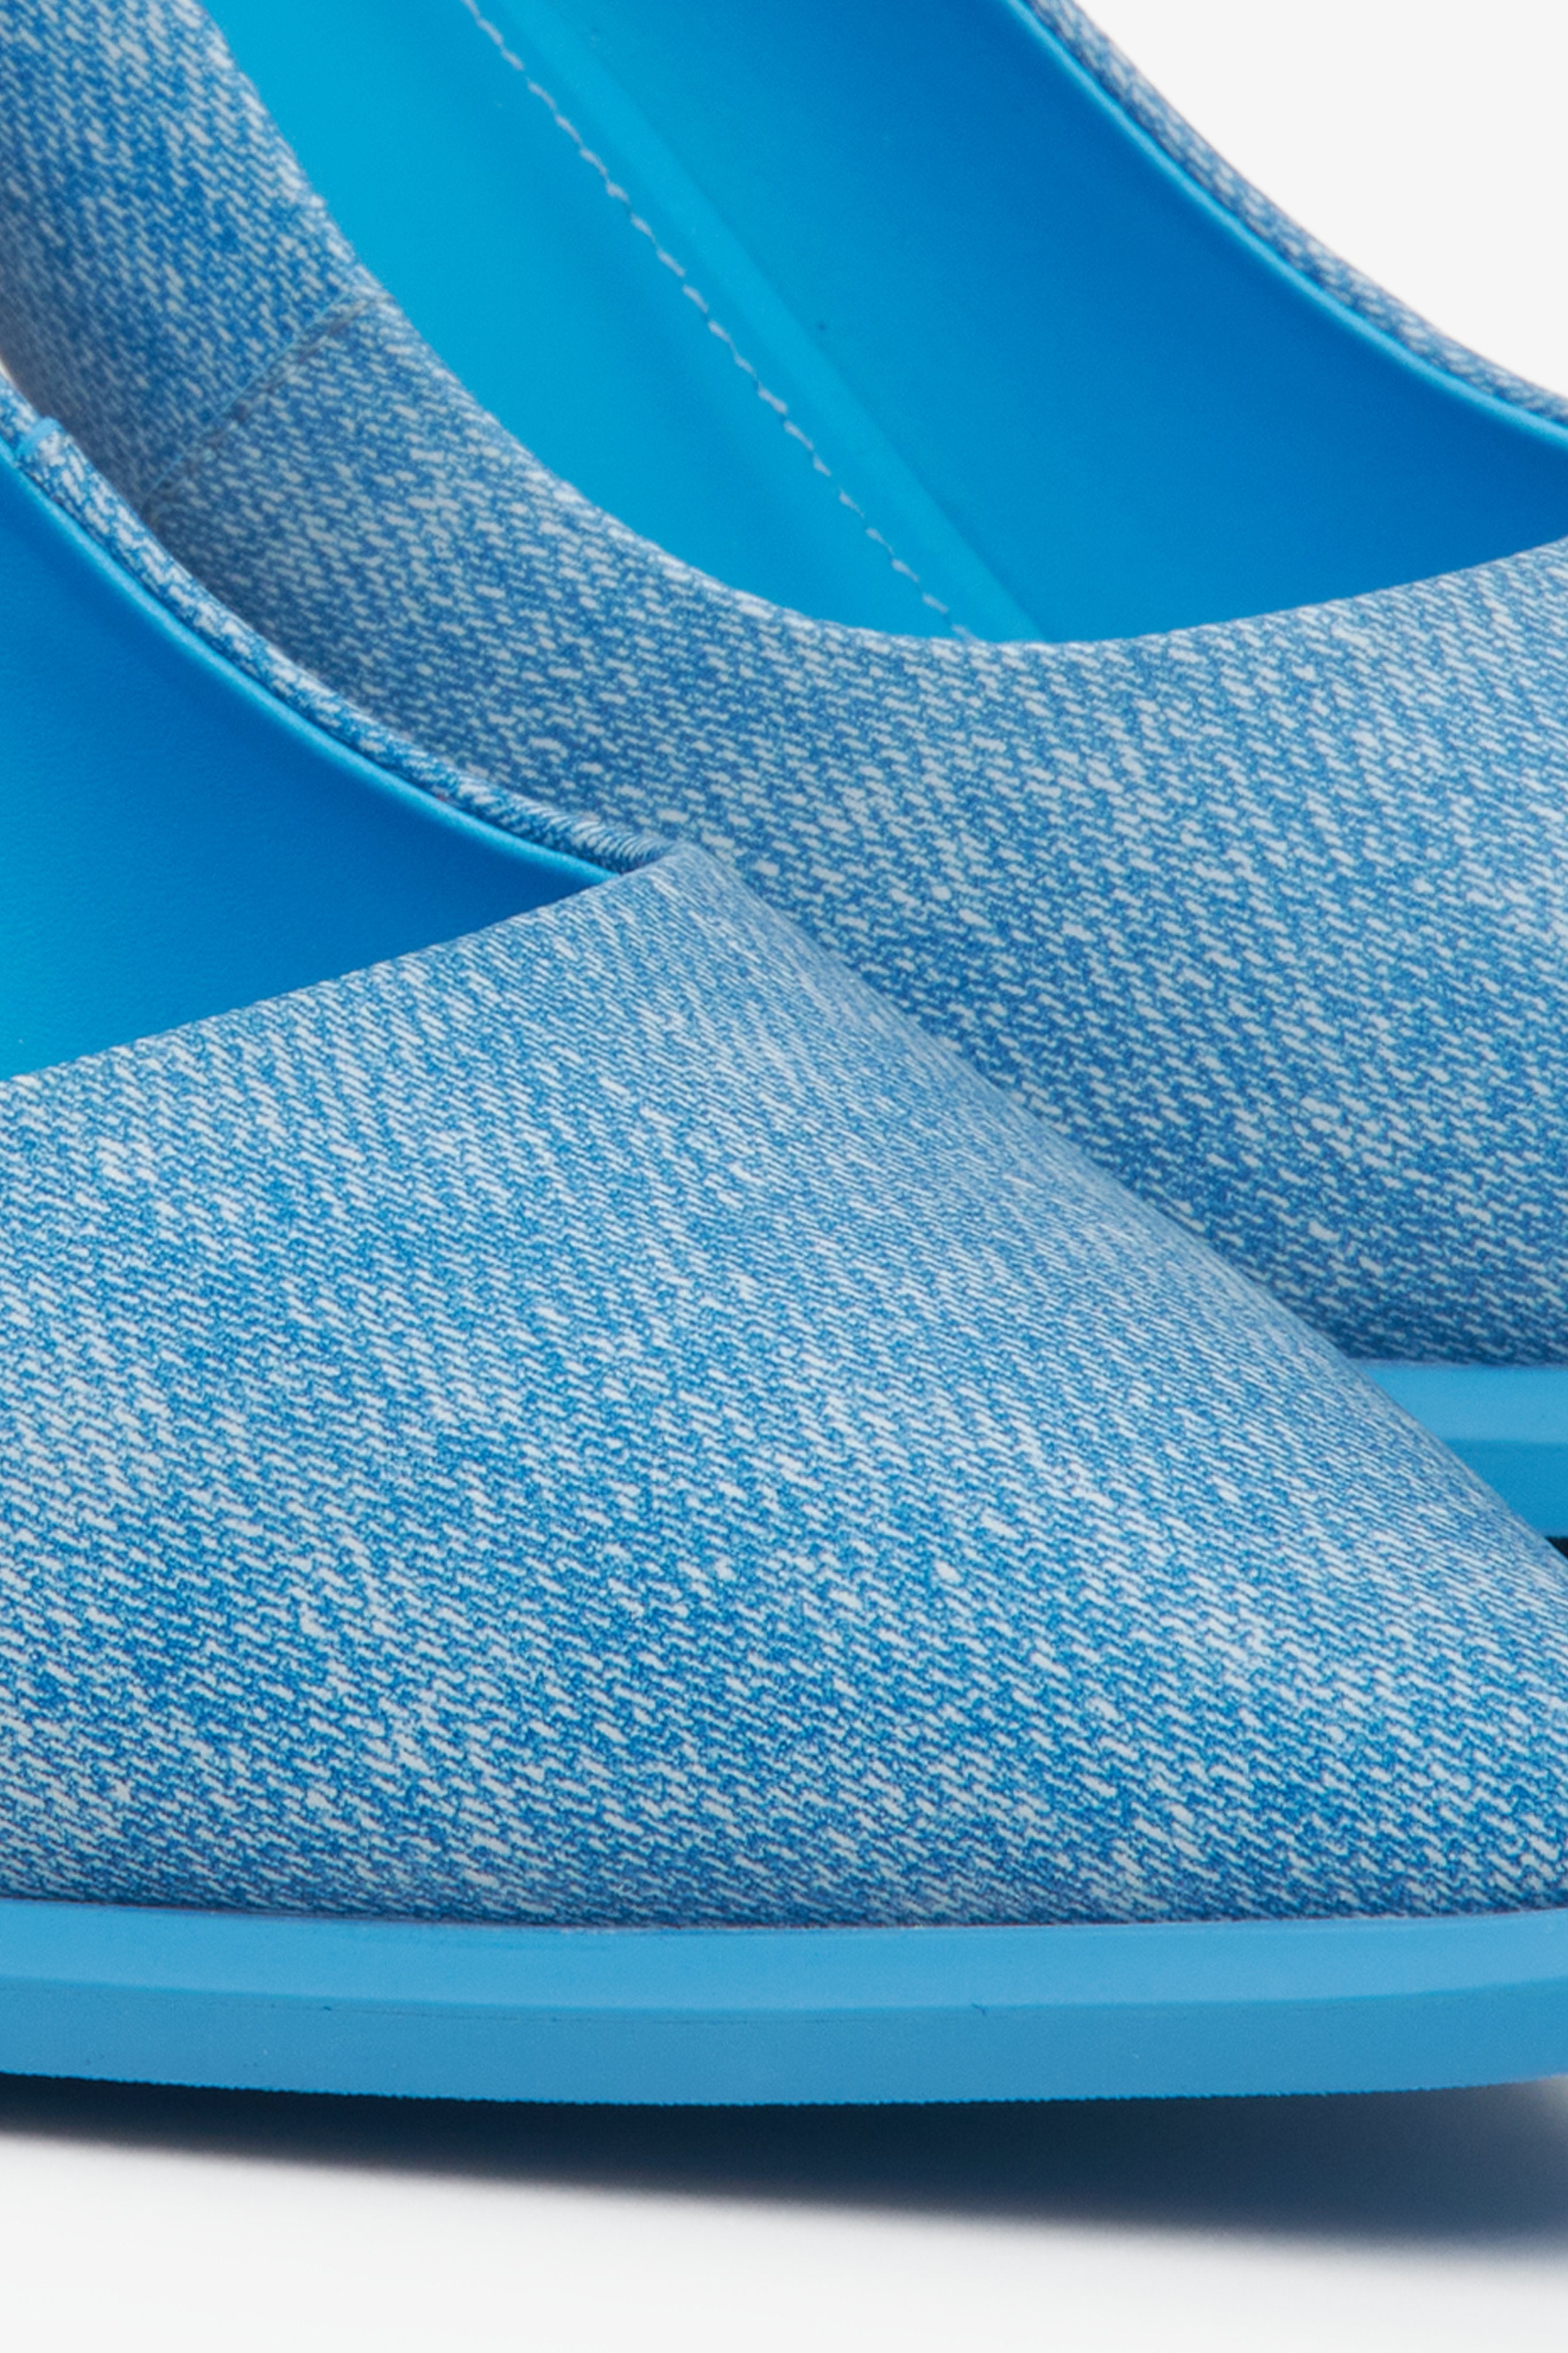 Blue textured denim women's pumps by Estro - close-up on detail.